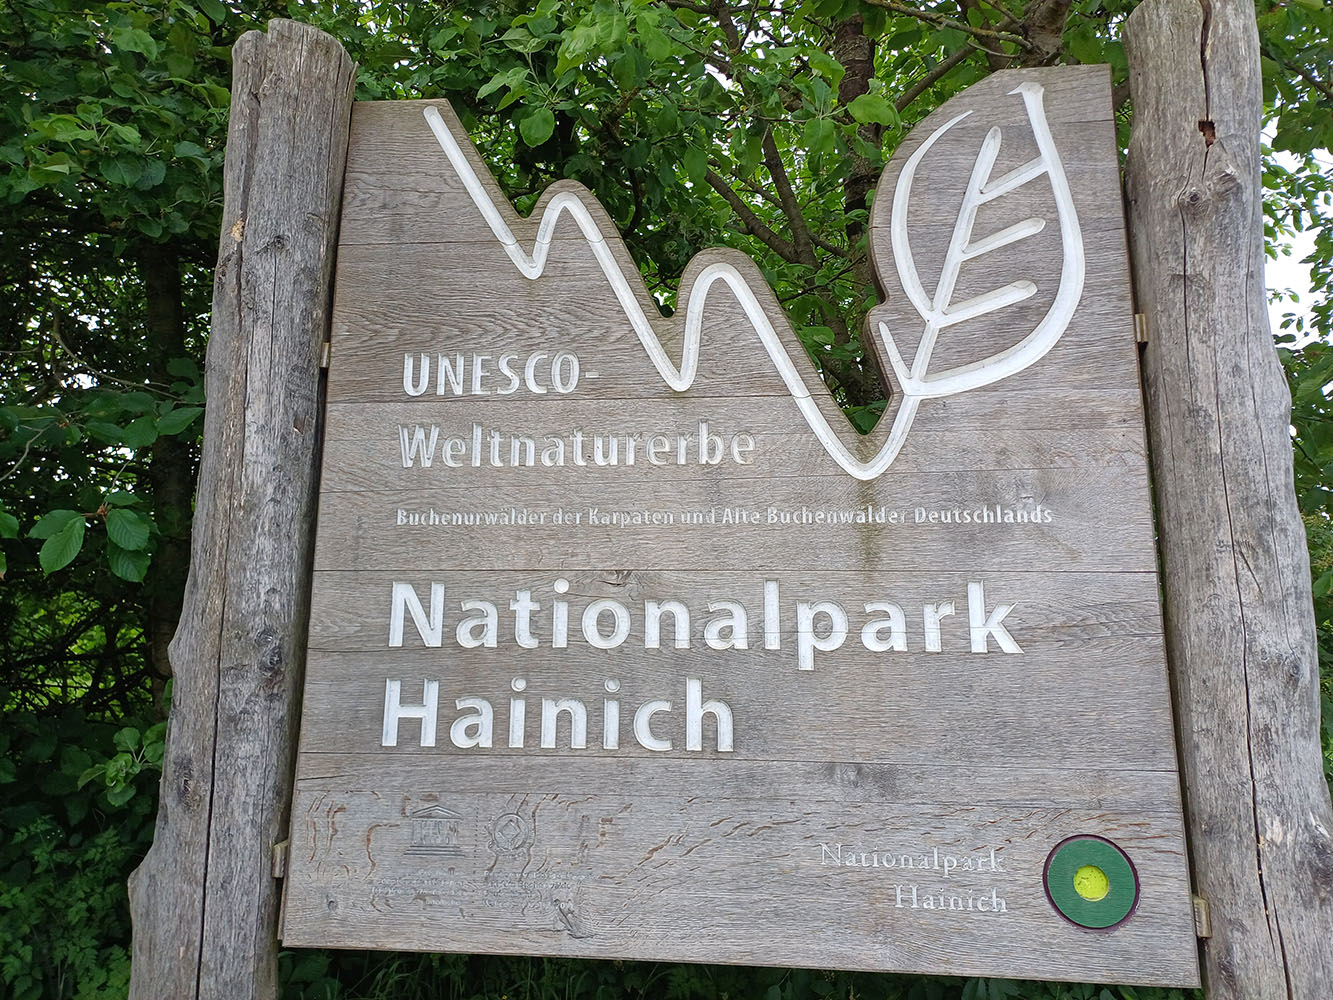 Nationalpark Hainich